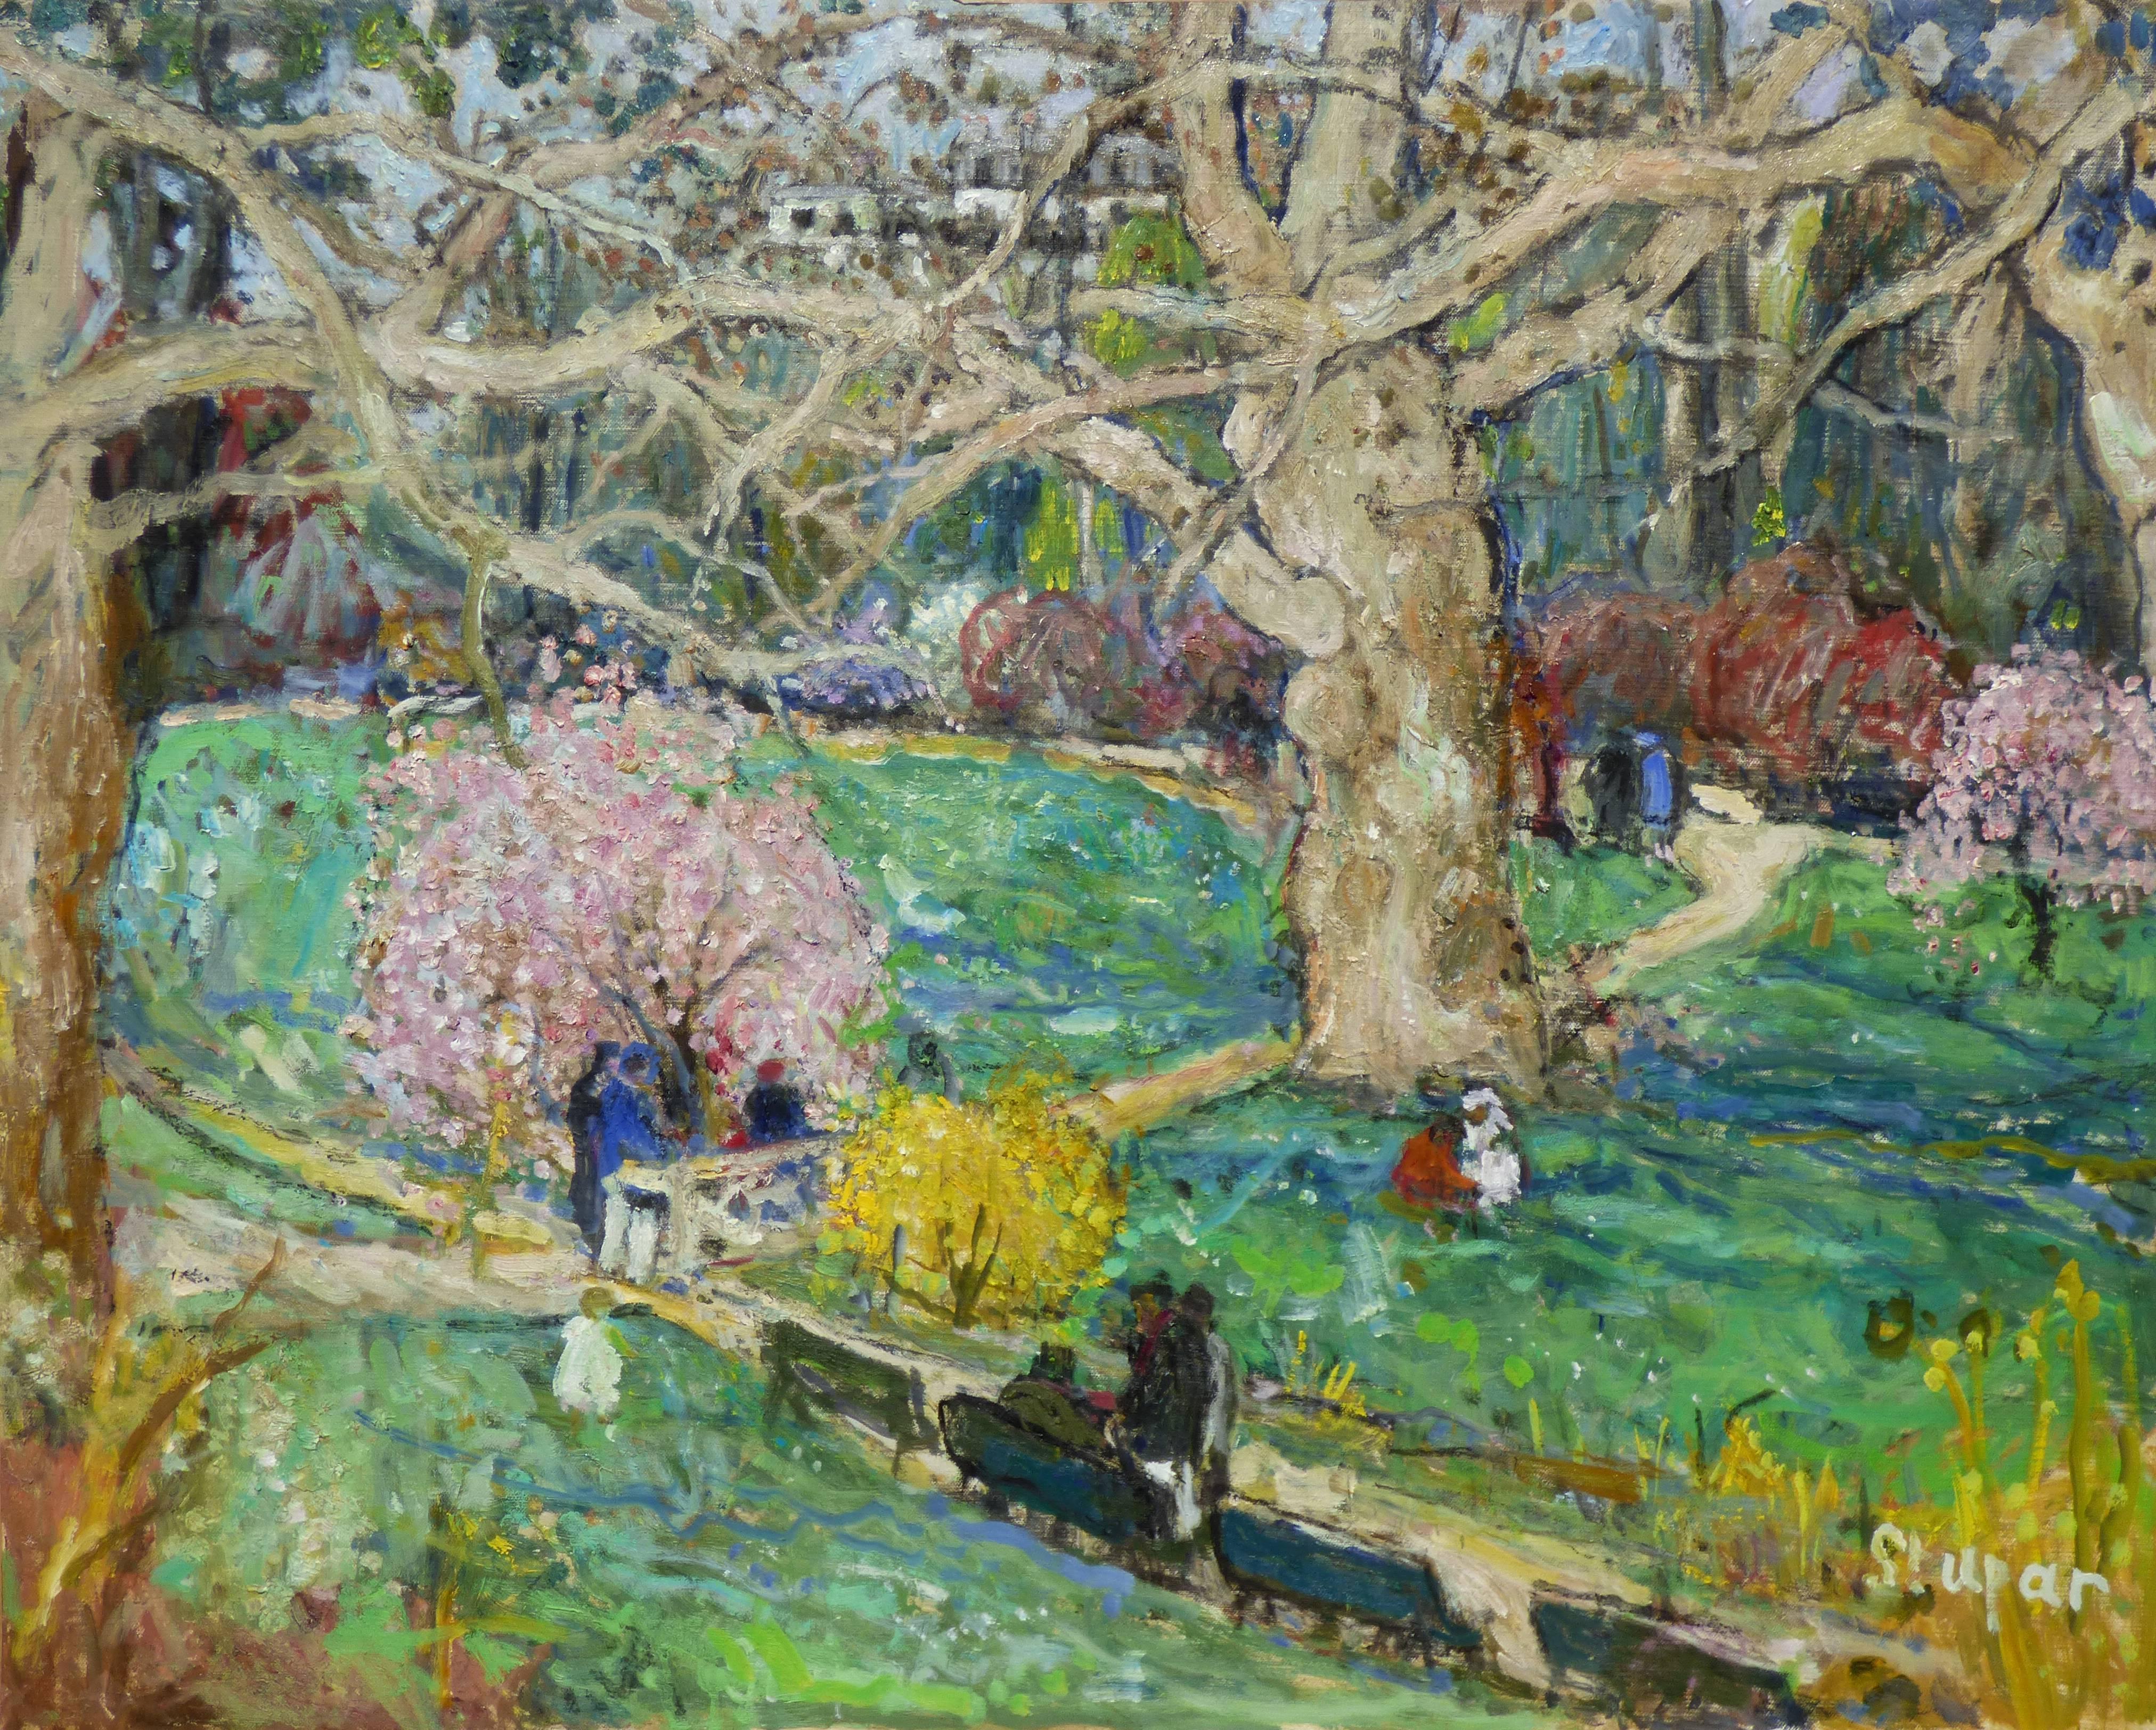 Marko STUPAR Landscape Painting - The Garden of Batignolles in Paris, France